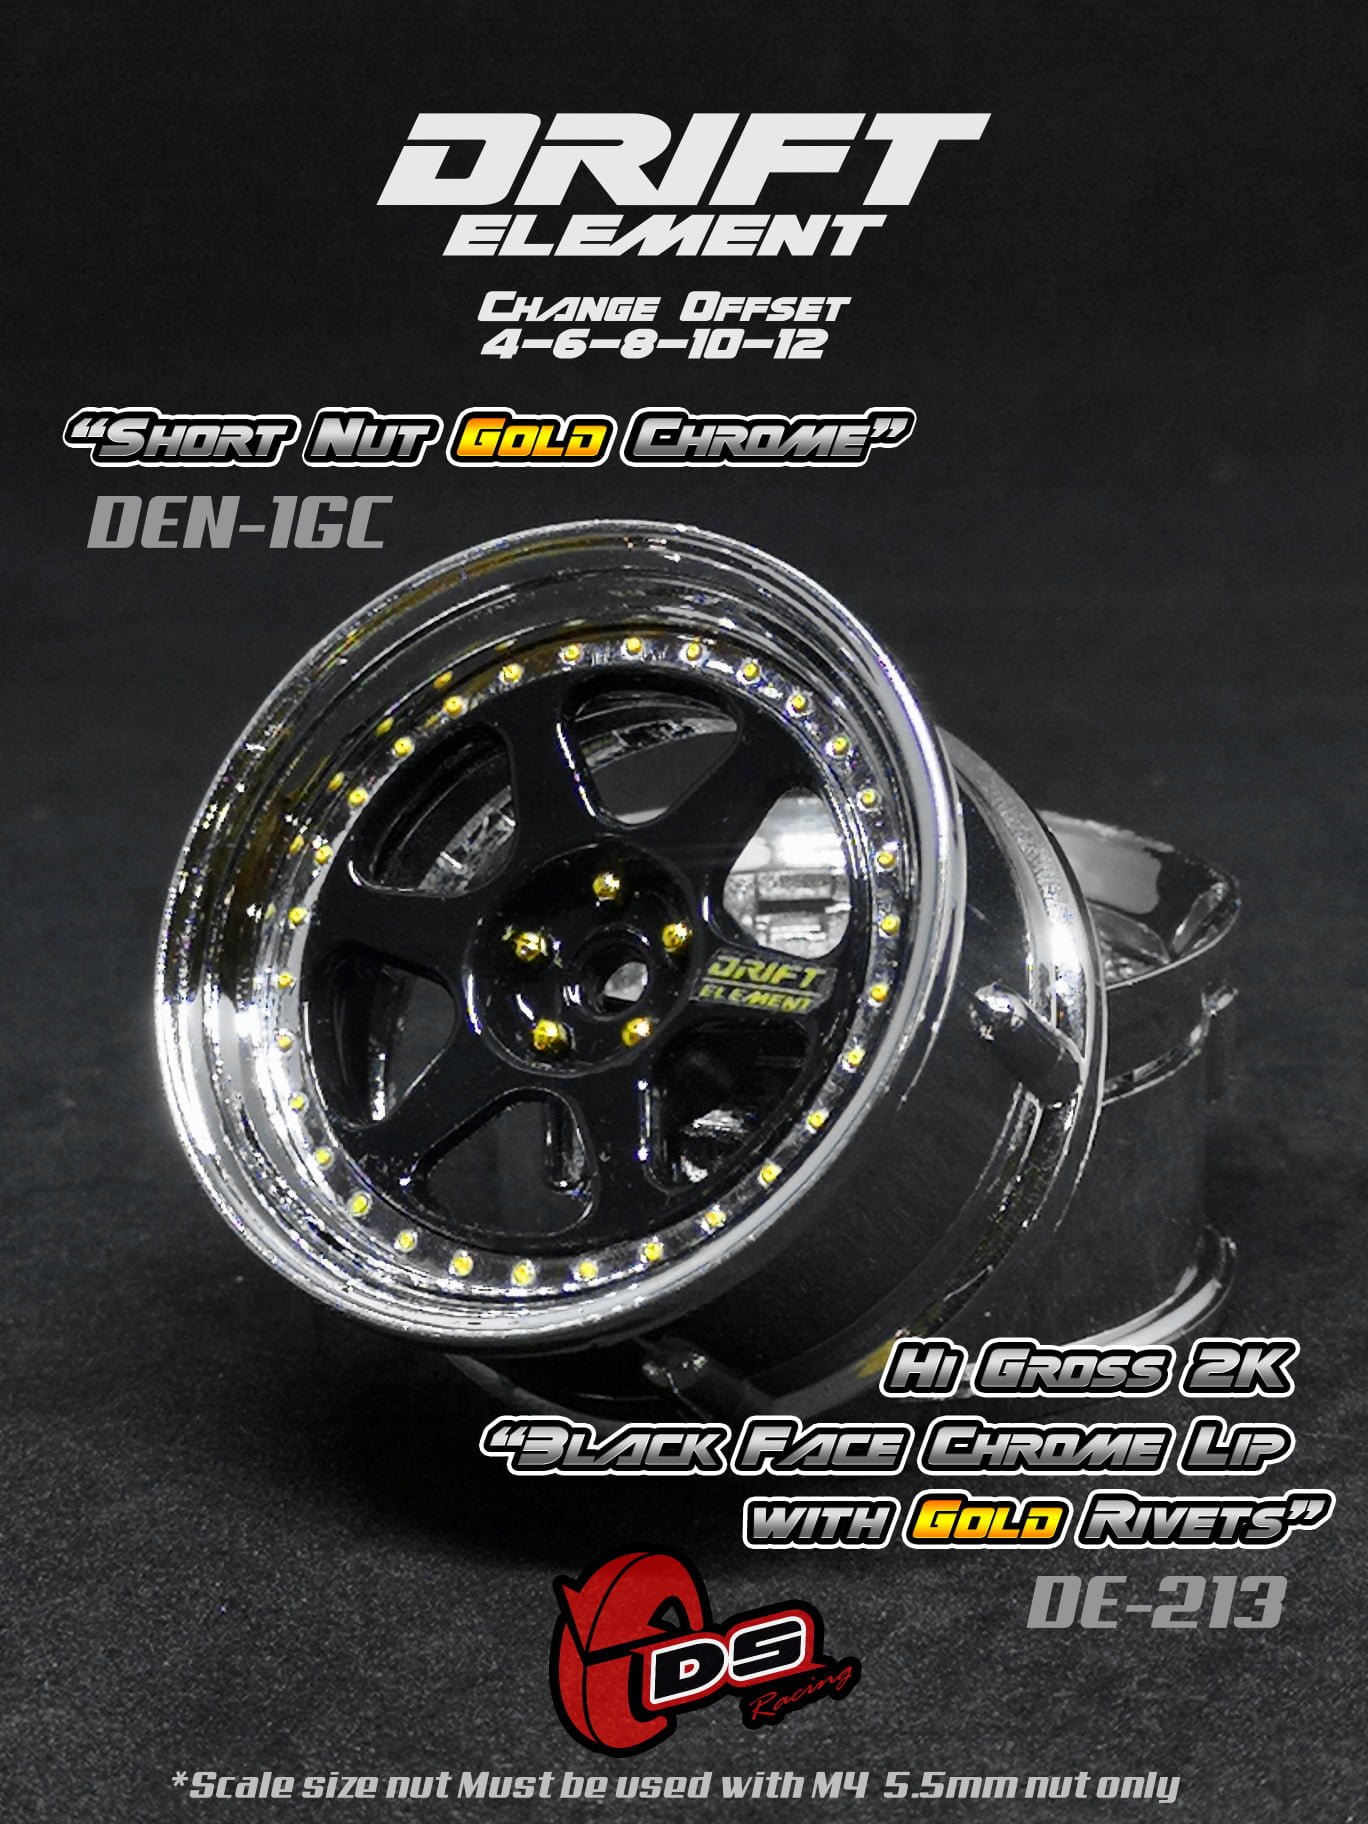 DS Racing Drift Element II 6 Spoke Rim 2 pcs Hi Gross 2K Black Face Chrome Lip with Gold Rivets – DE213